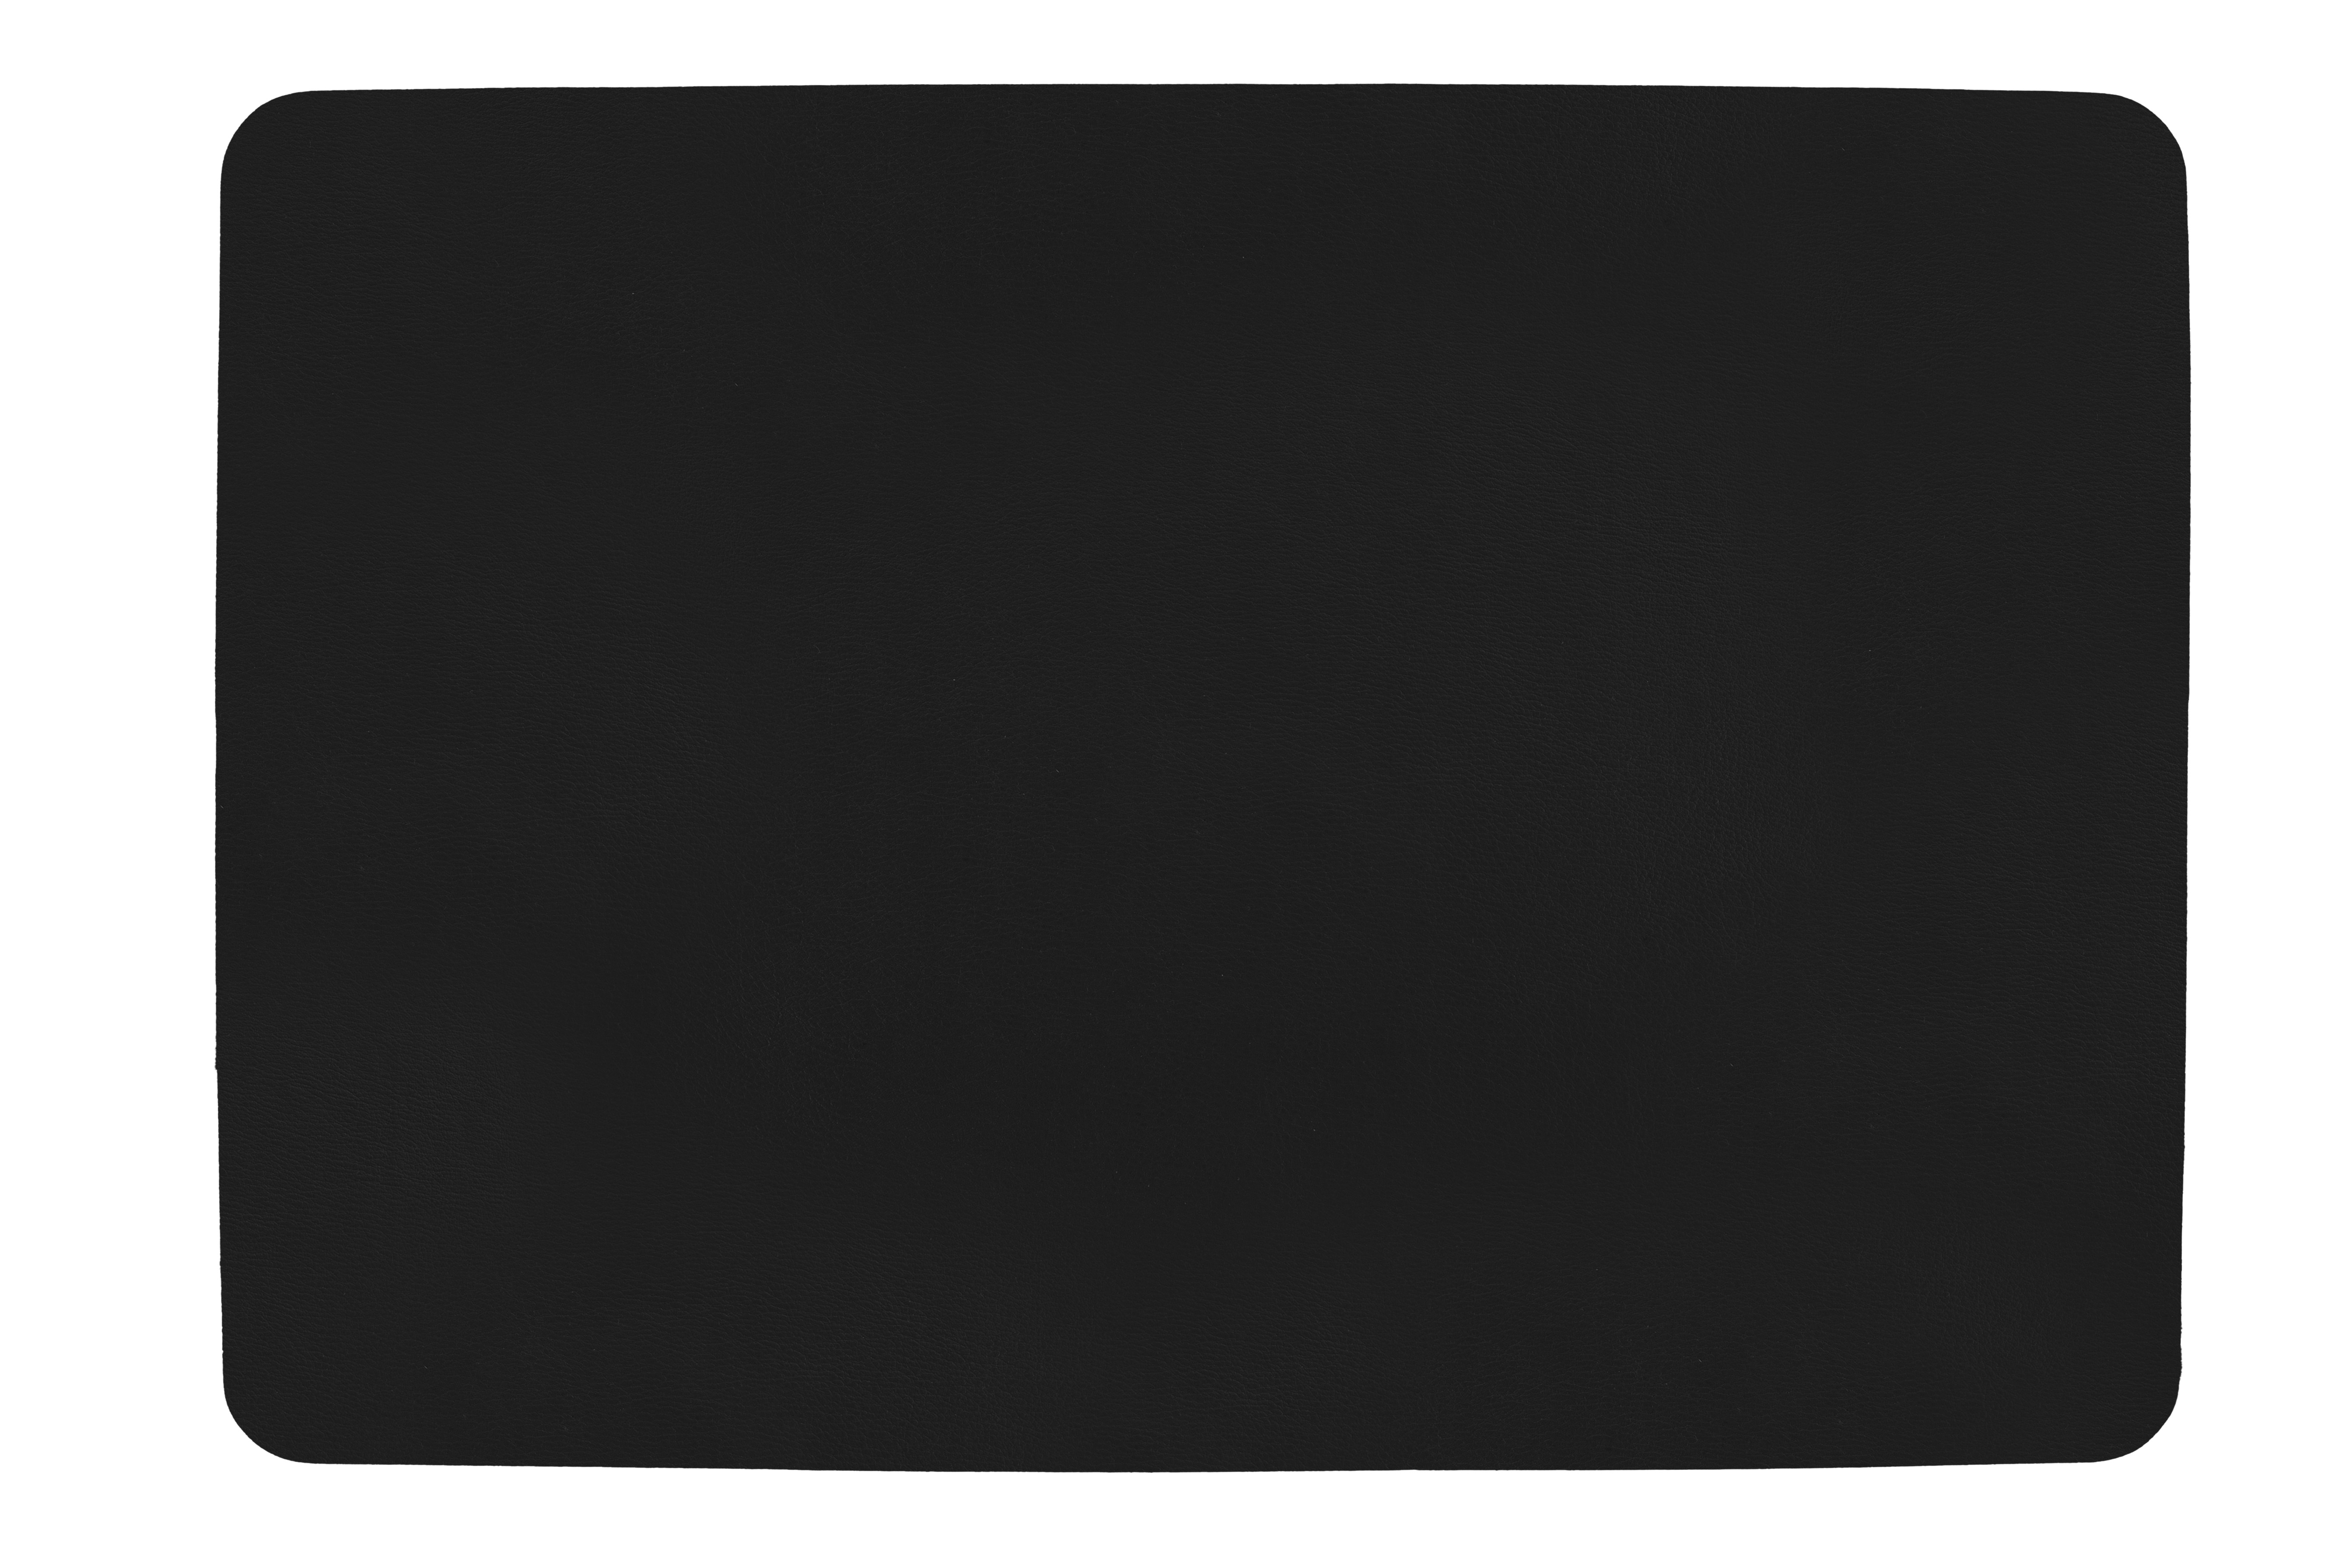 Placemat TOGO, 33x45cm, zwart - set of 6 in giftbox